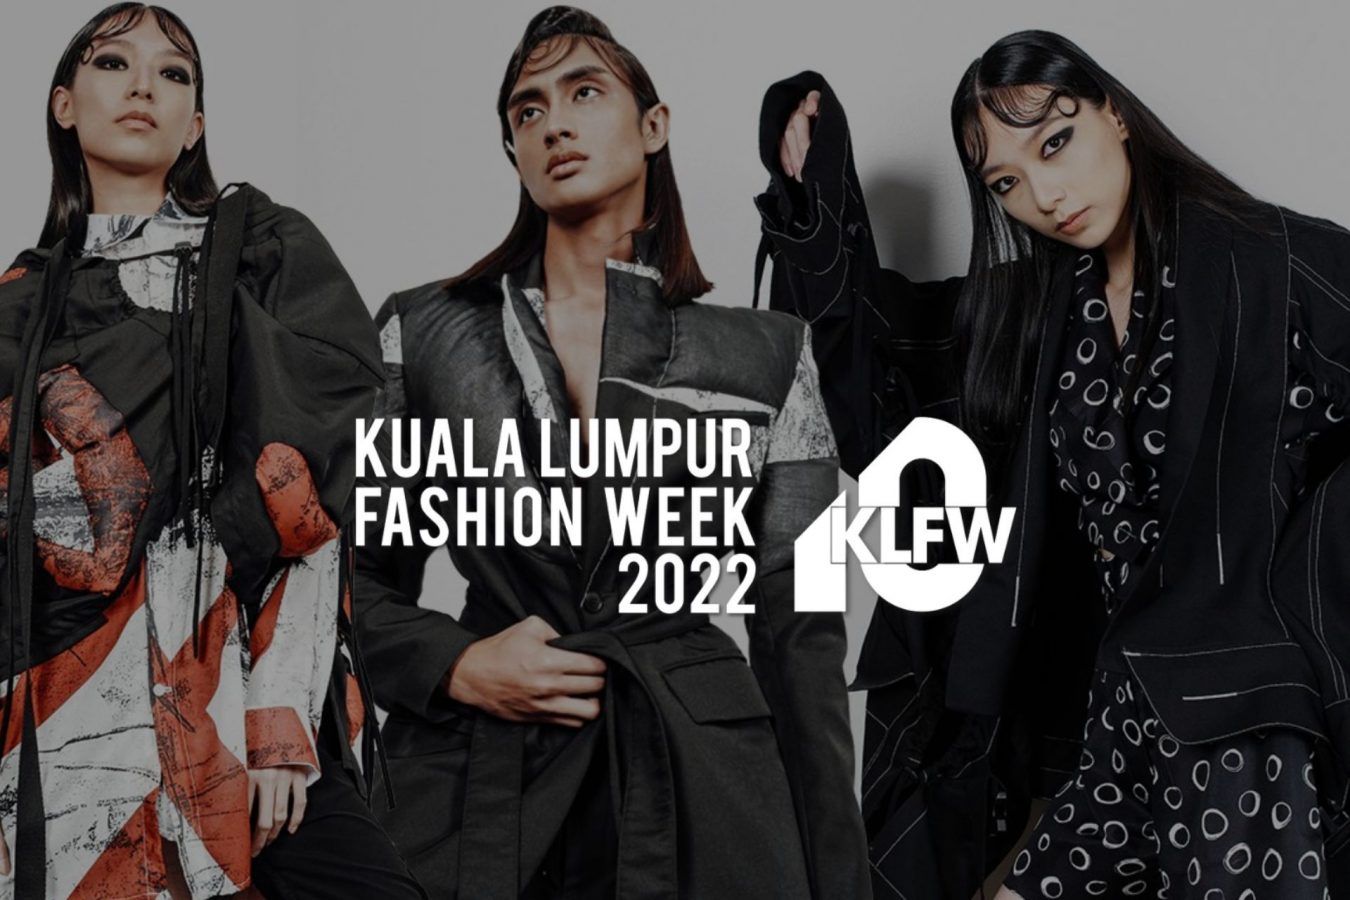 Kuala Lumpur Fashion Week (KLFW) is marking a decade of fashion celebration